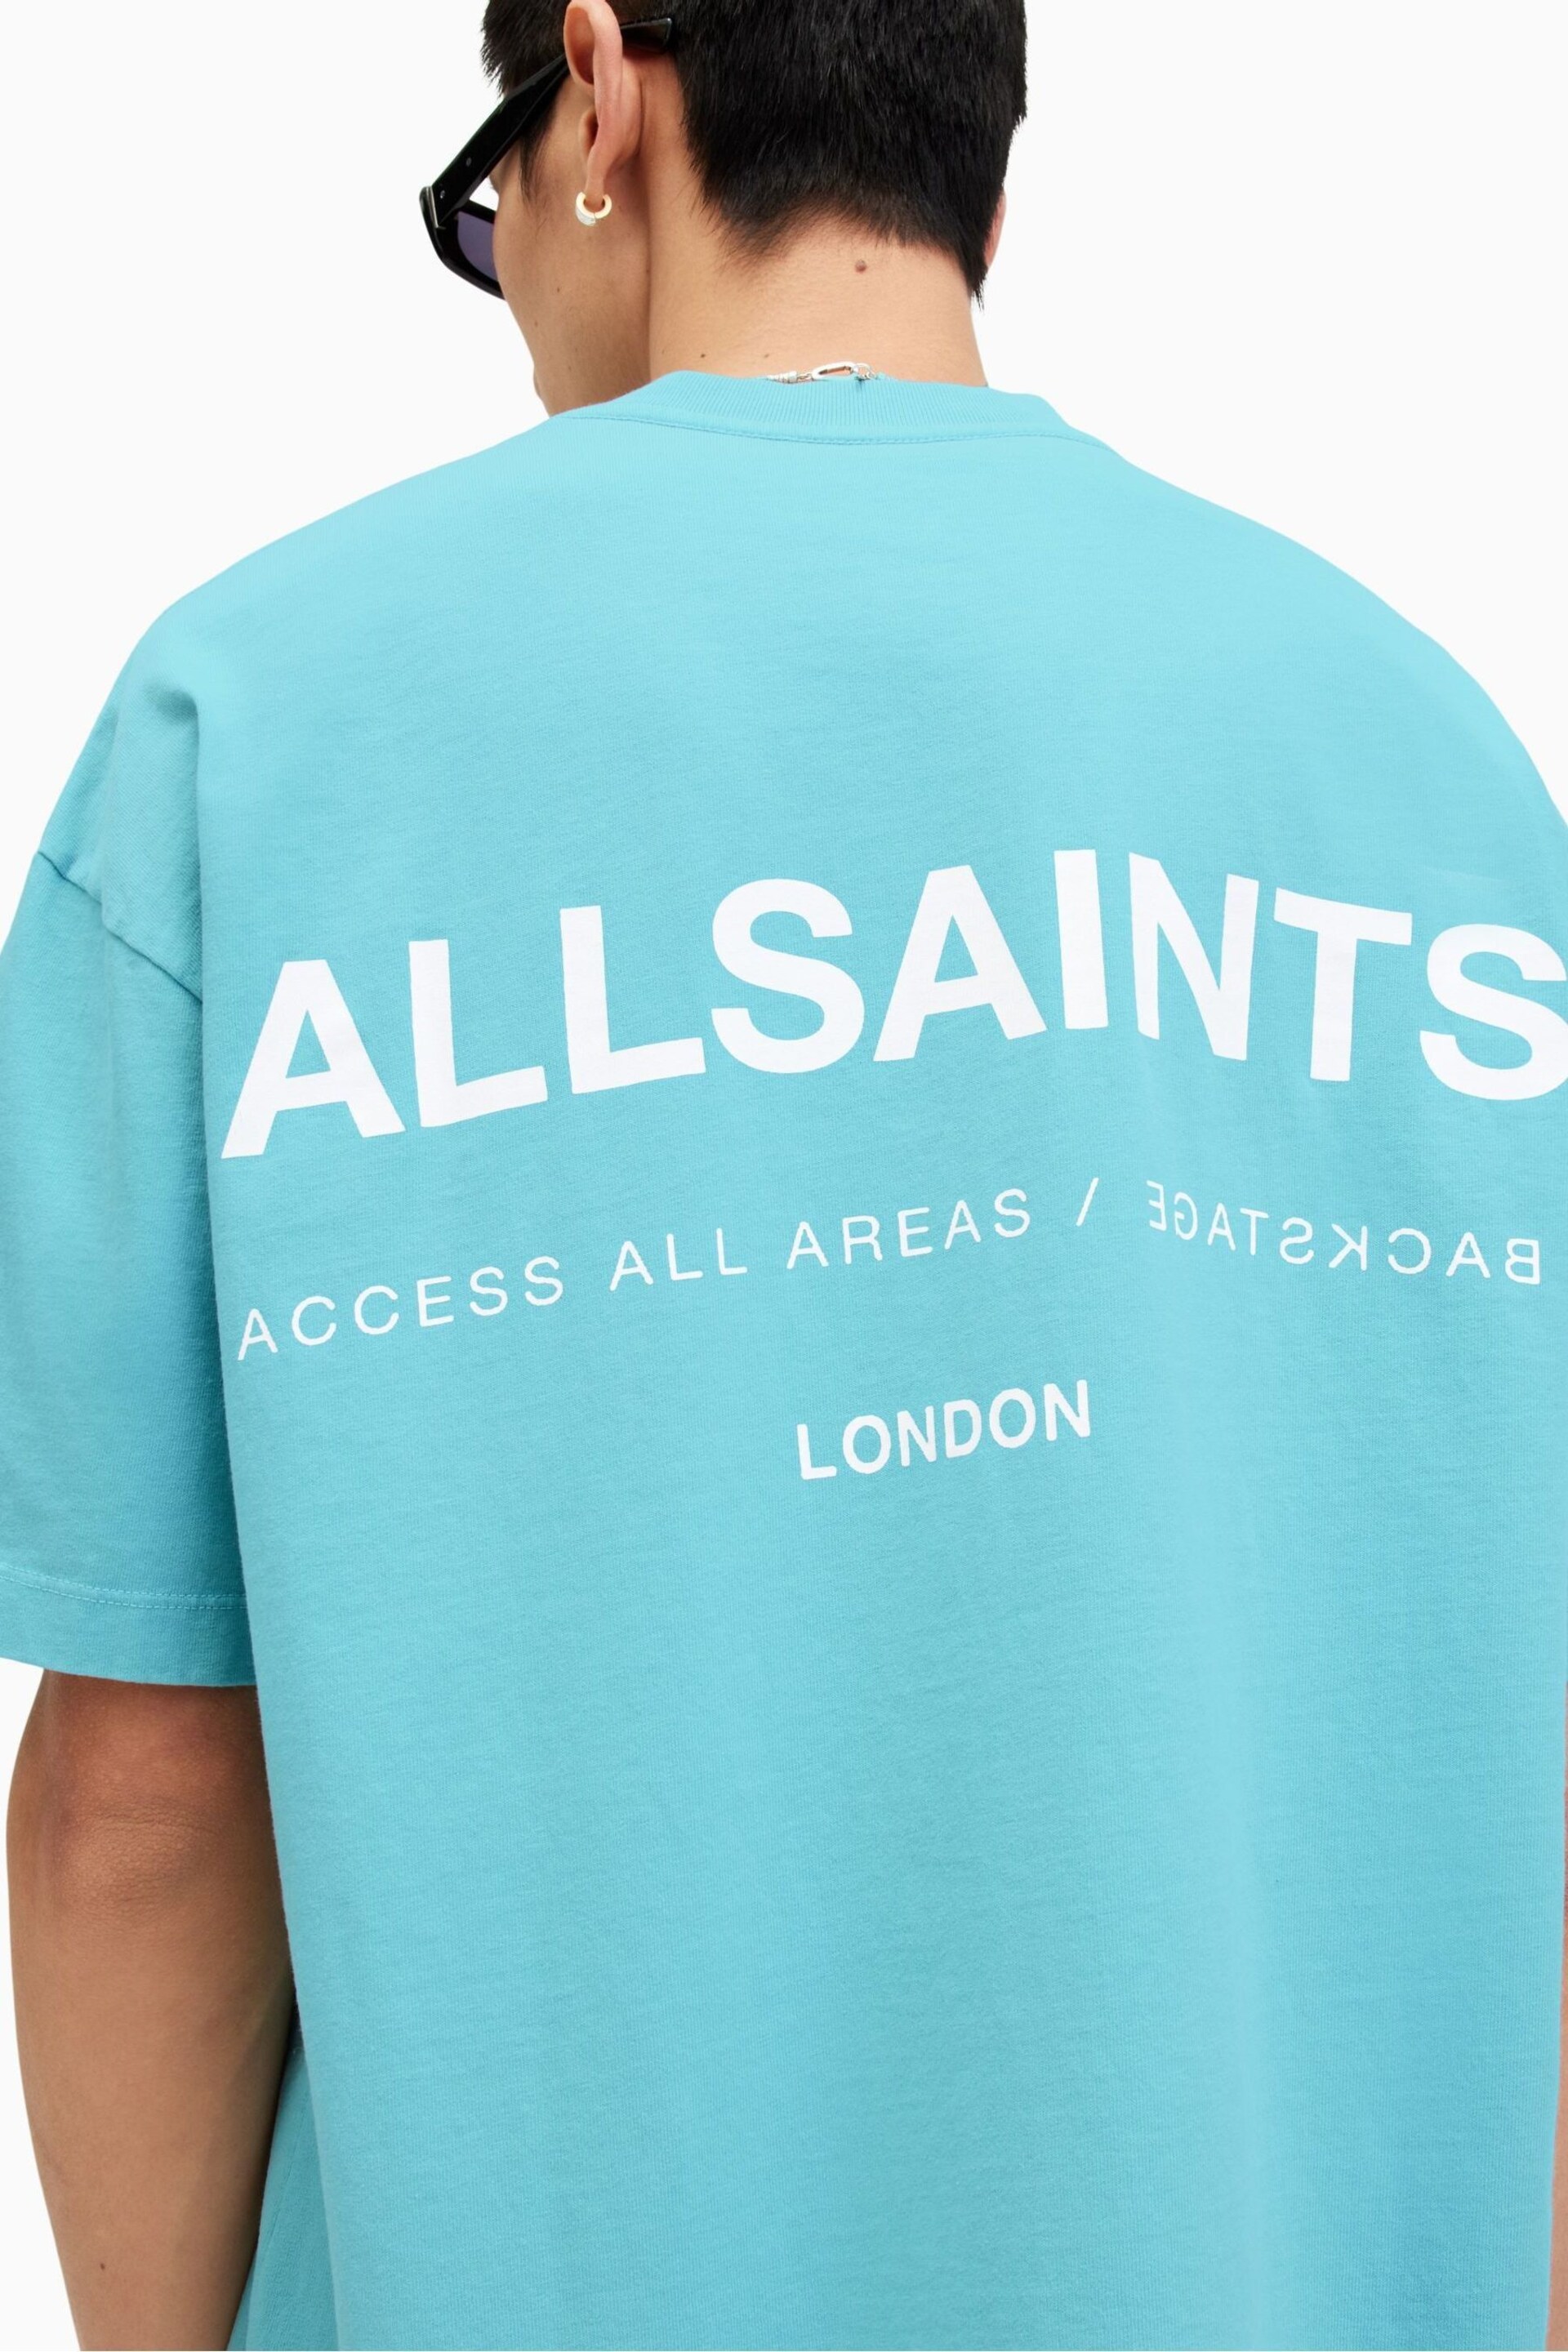 AllSaints Blue Access Shortsleeve Crew T-Shirt - Image 5 of 6